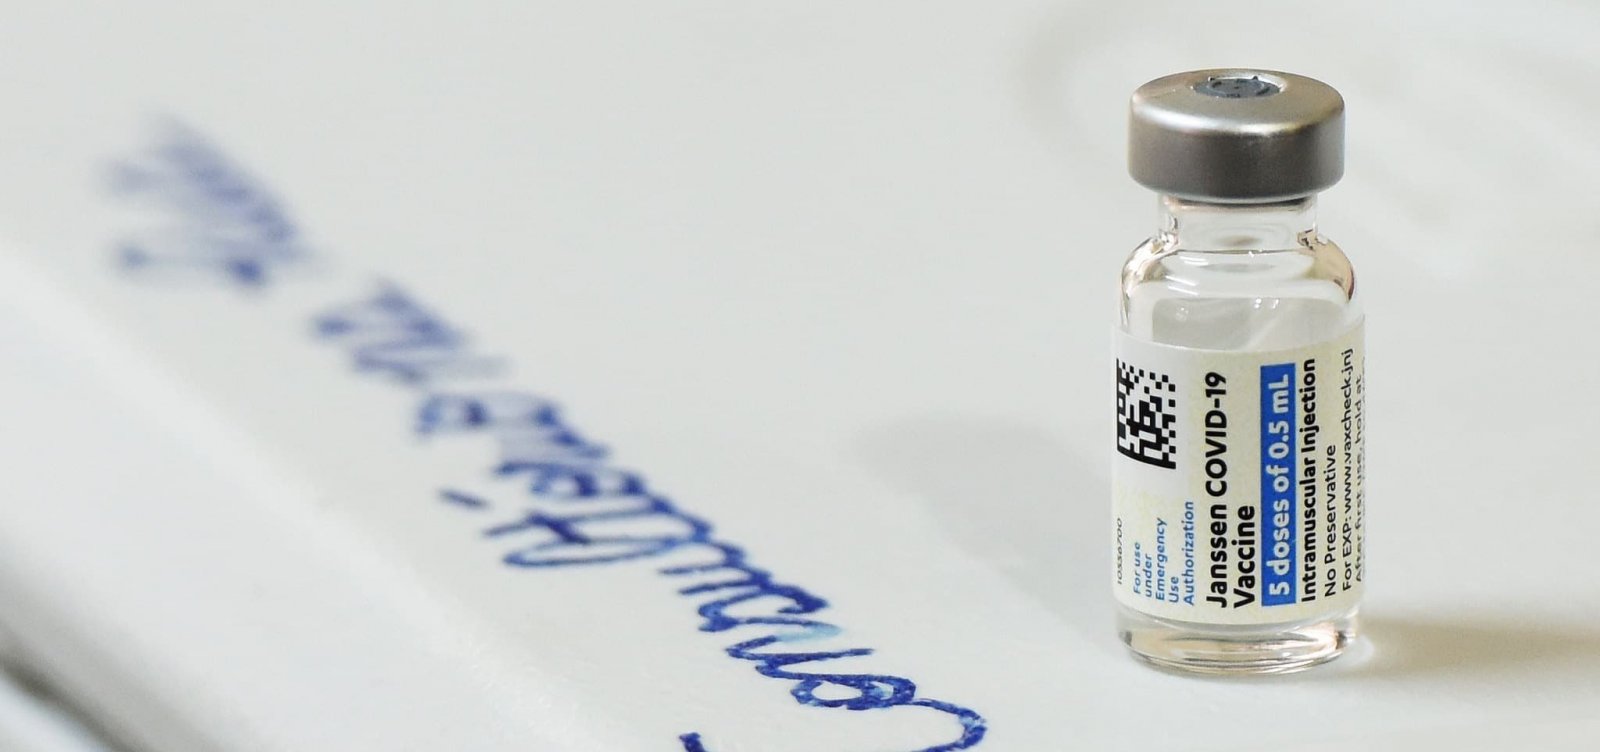 Bahia mantém intervalo entre doses das vacinas contra Covid-19 